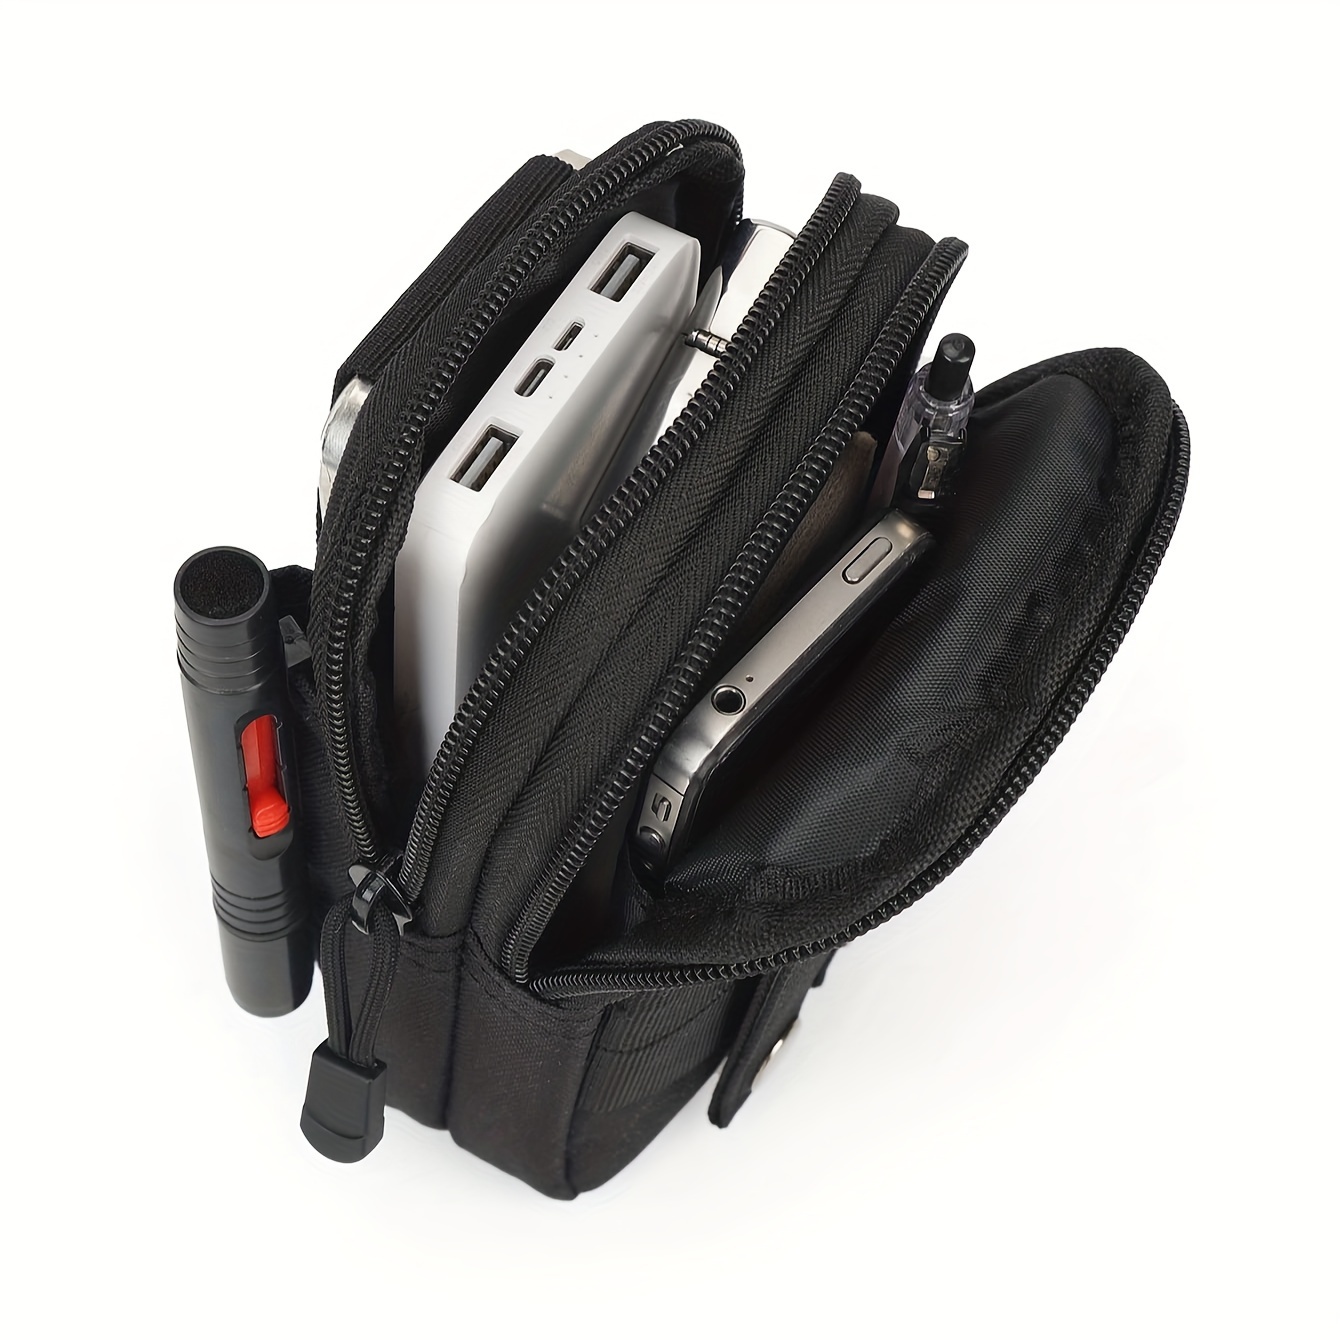 CAMPOMAGGI belt bag Apollo Waist Bag + Pocket Moro, Buy bags, purses &  accessories online